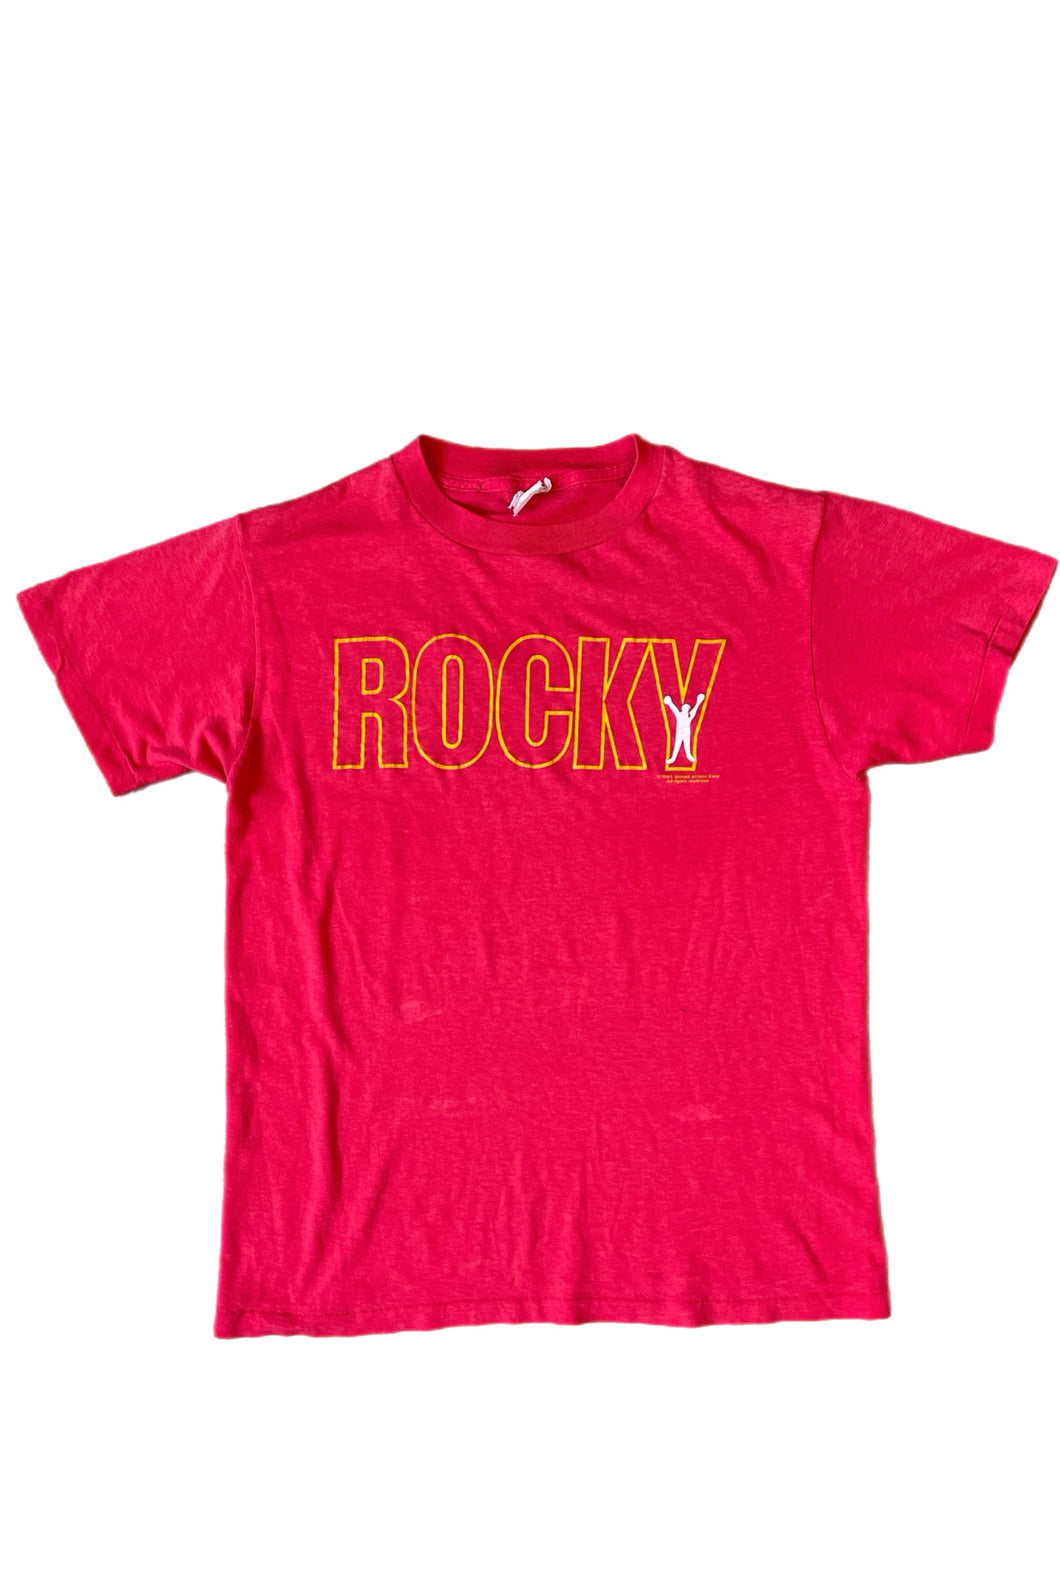 Vintage 1985 Rocky Movie T-Shirt